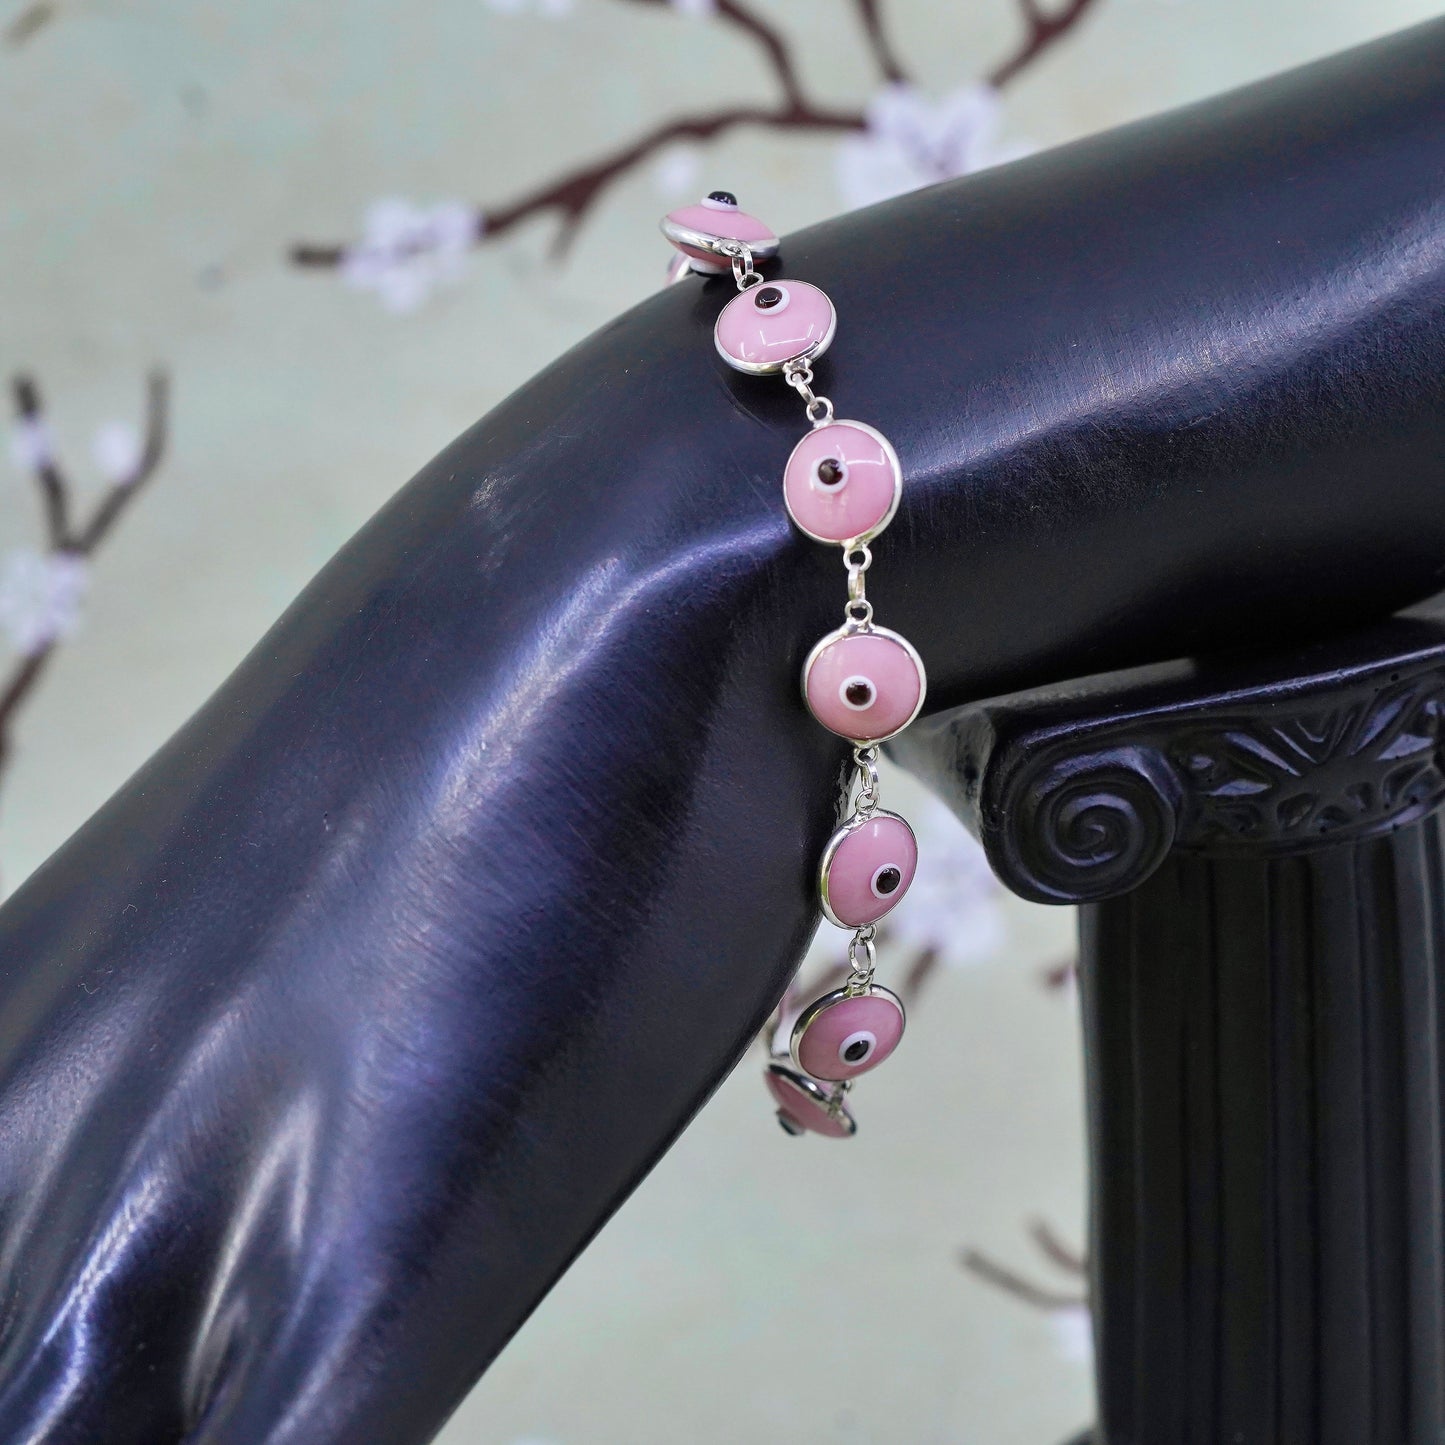 6.75”, vintage handmade sterling silver bracelet, pink glass evil eye beads